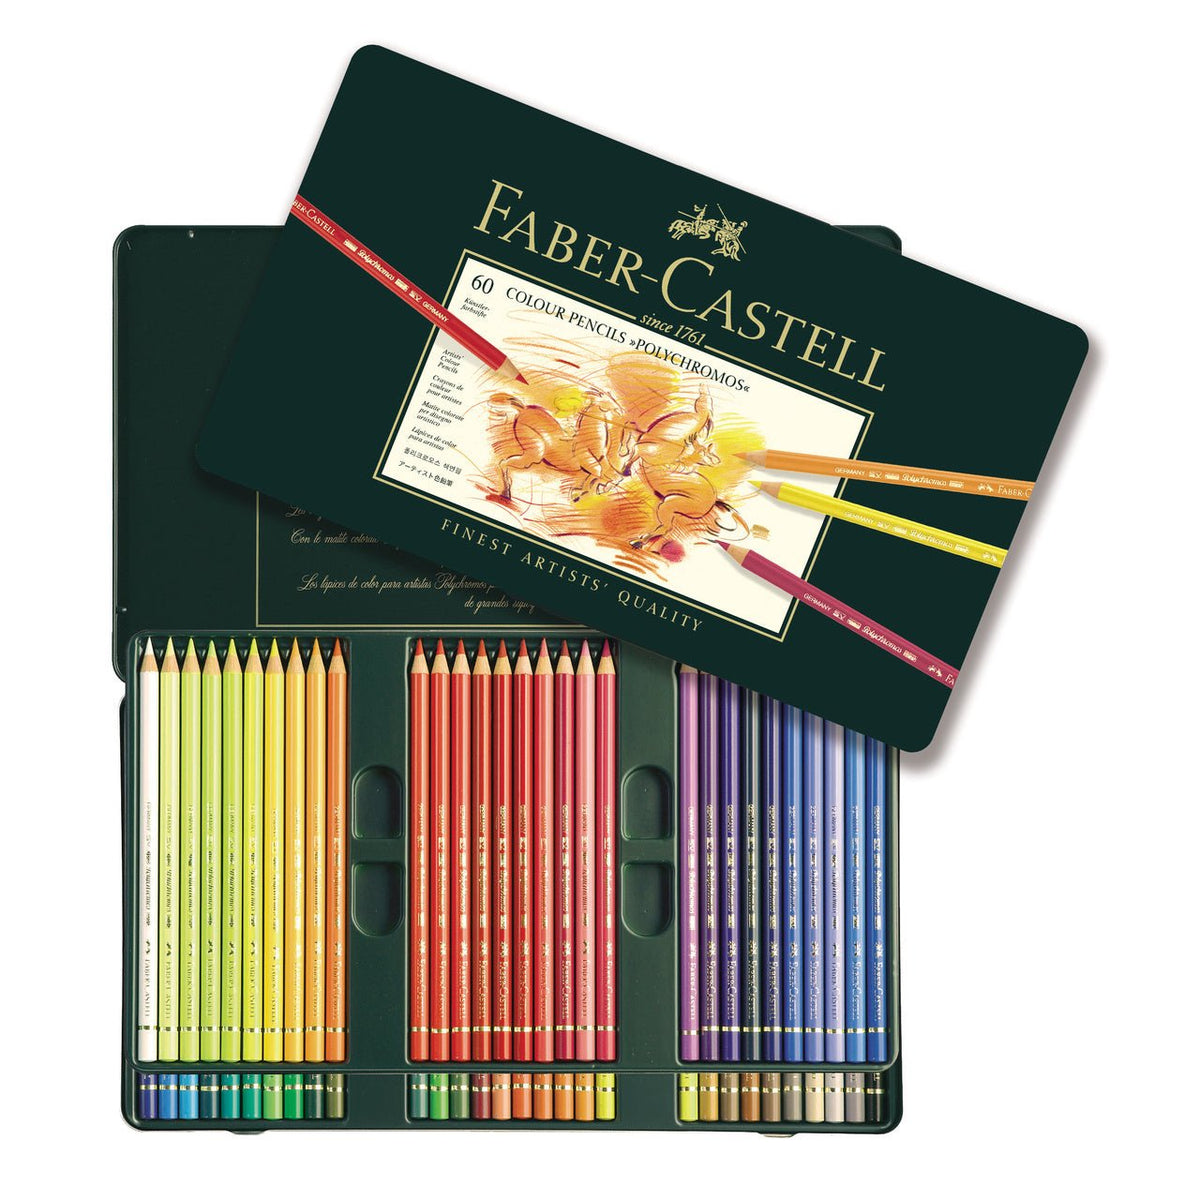  Faber-Castell Pitt Pastel Pencil - Payne's Grey #181